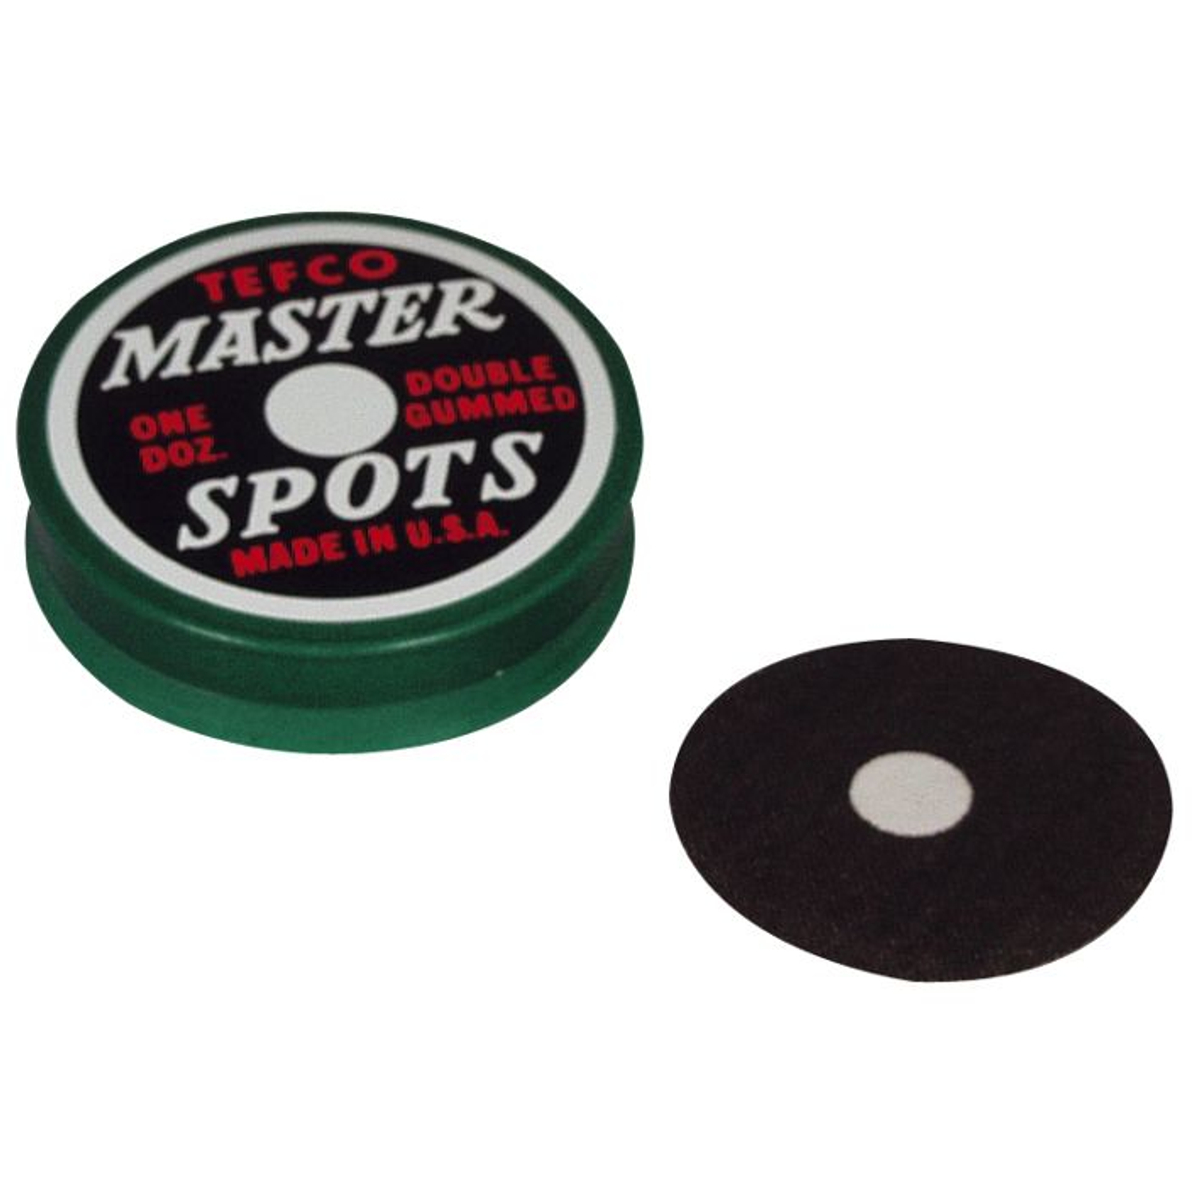 Spots - Tefco Master 35 mm 12 St